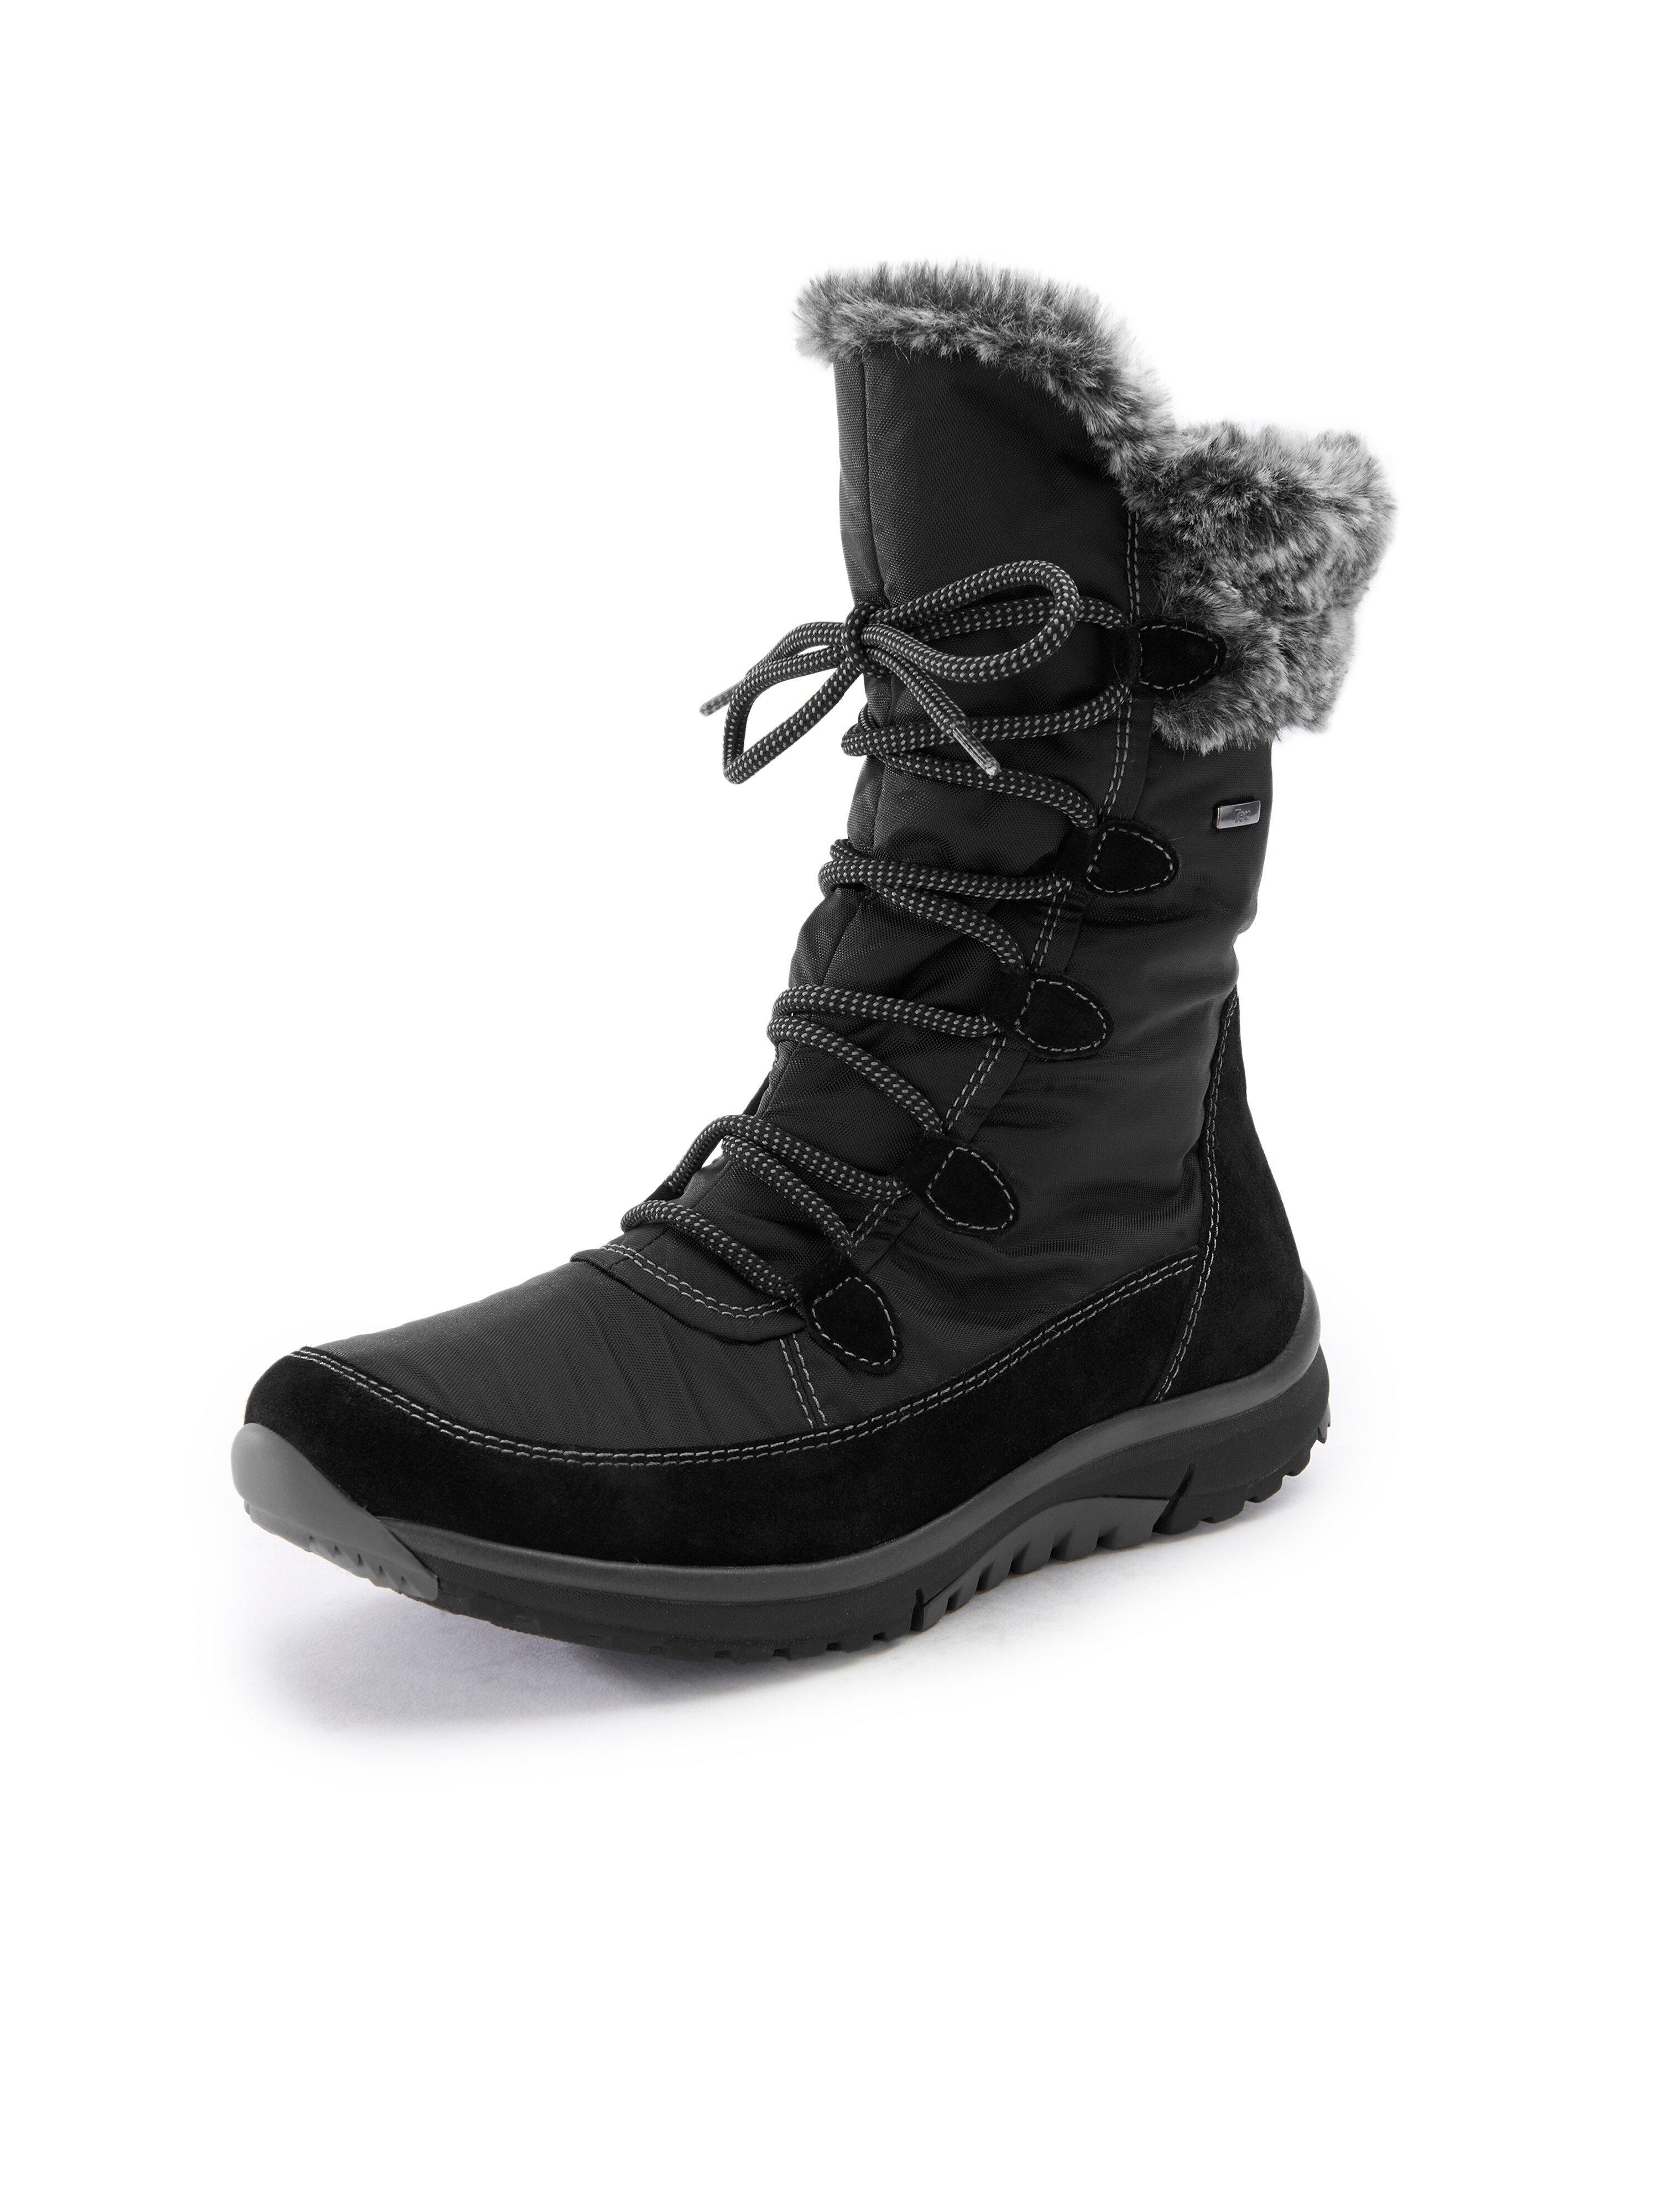 gabor snow boots